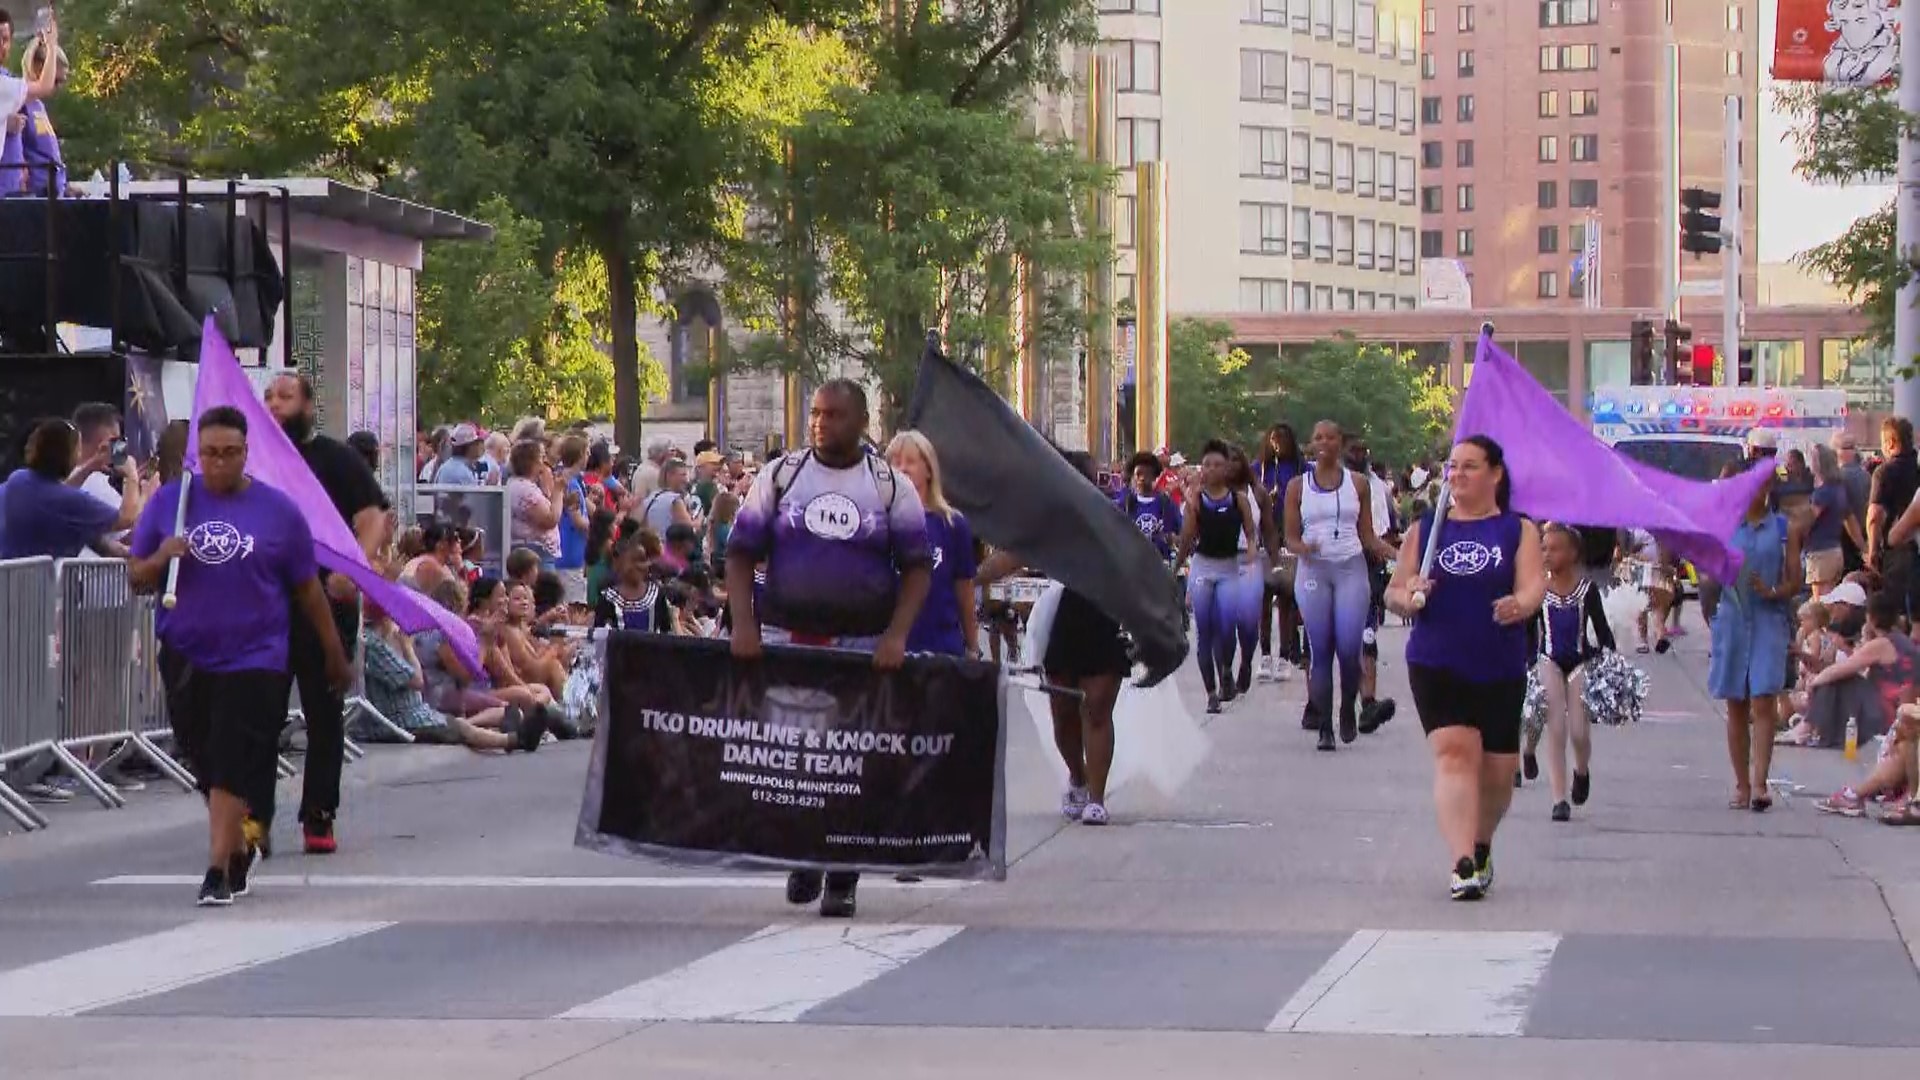 Minneapolis Aquatennial kicks off with parade